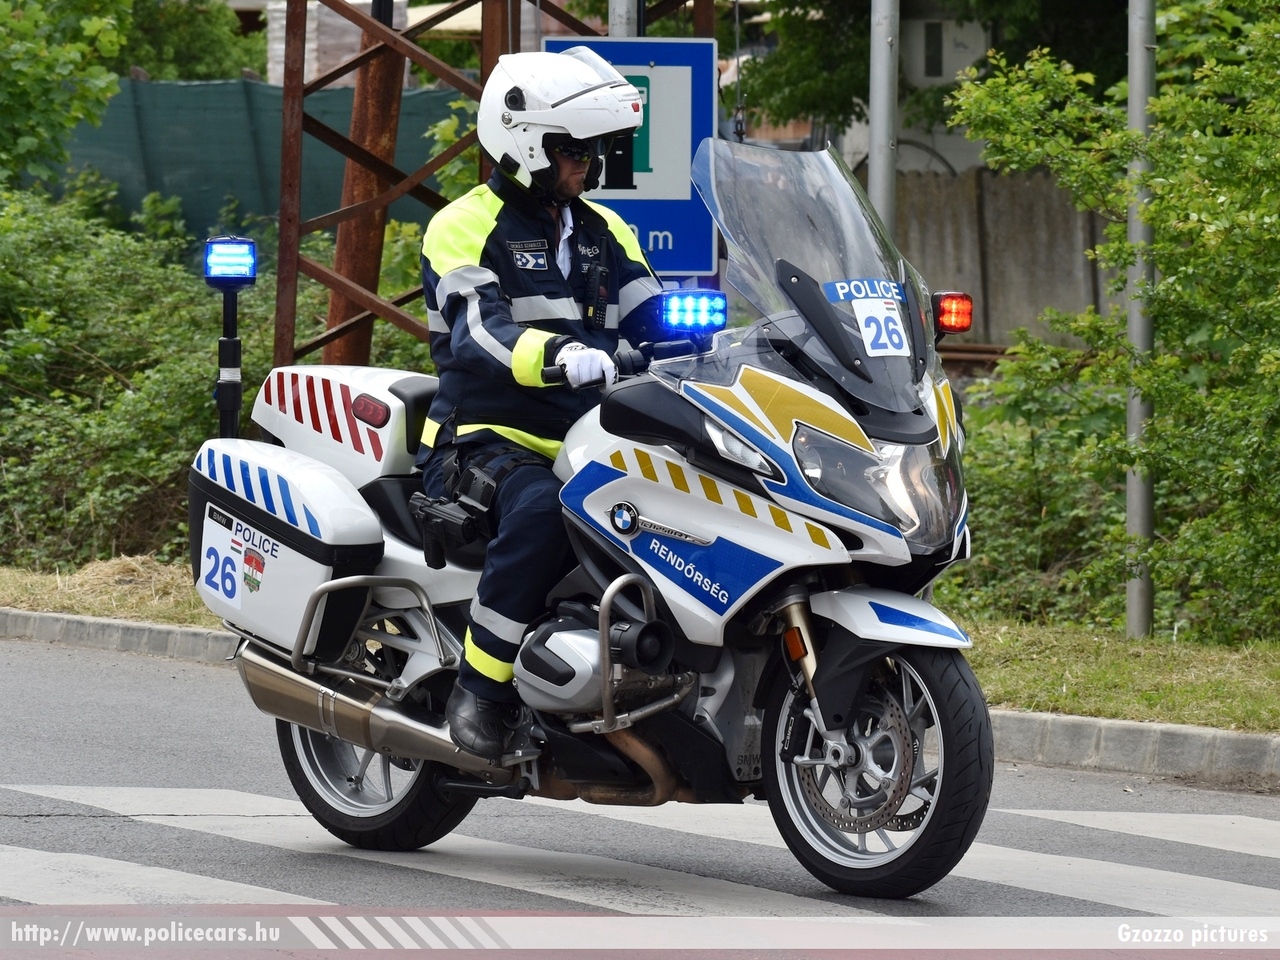 BMW R1200RT-P-LC, fotó: Gzozzo pictures
Keywords: motor rendőr rendőrmotor rendőrség magyar Magyarország police Hungary hungarian policebike policemotorcycle